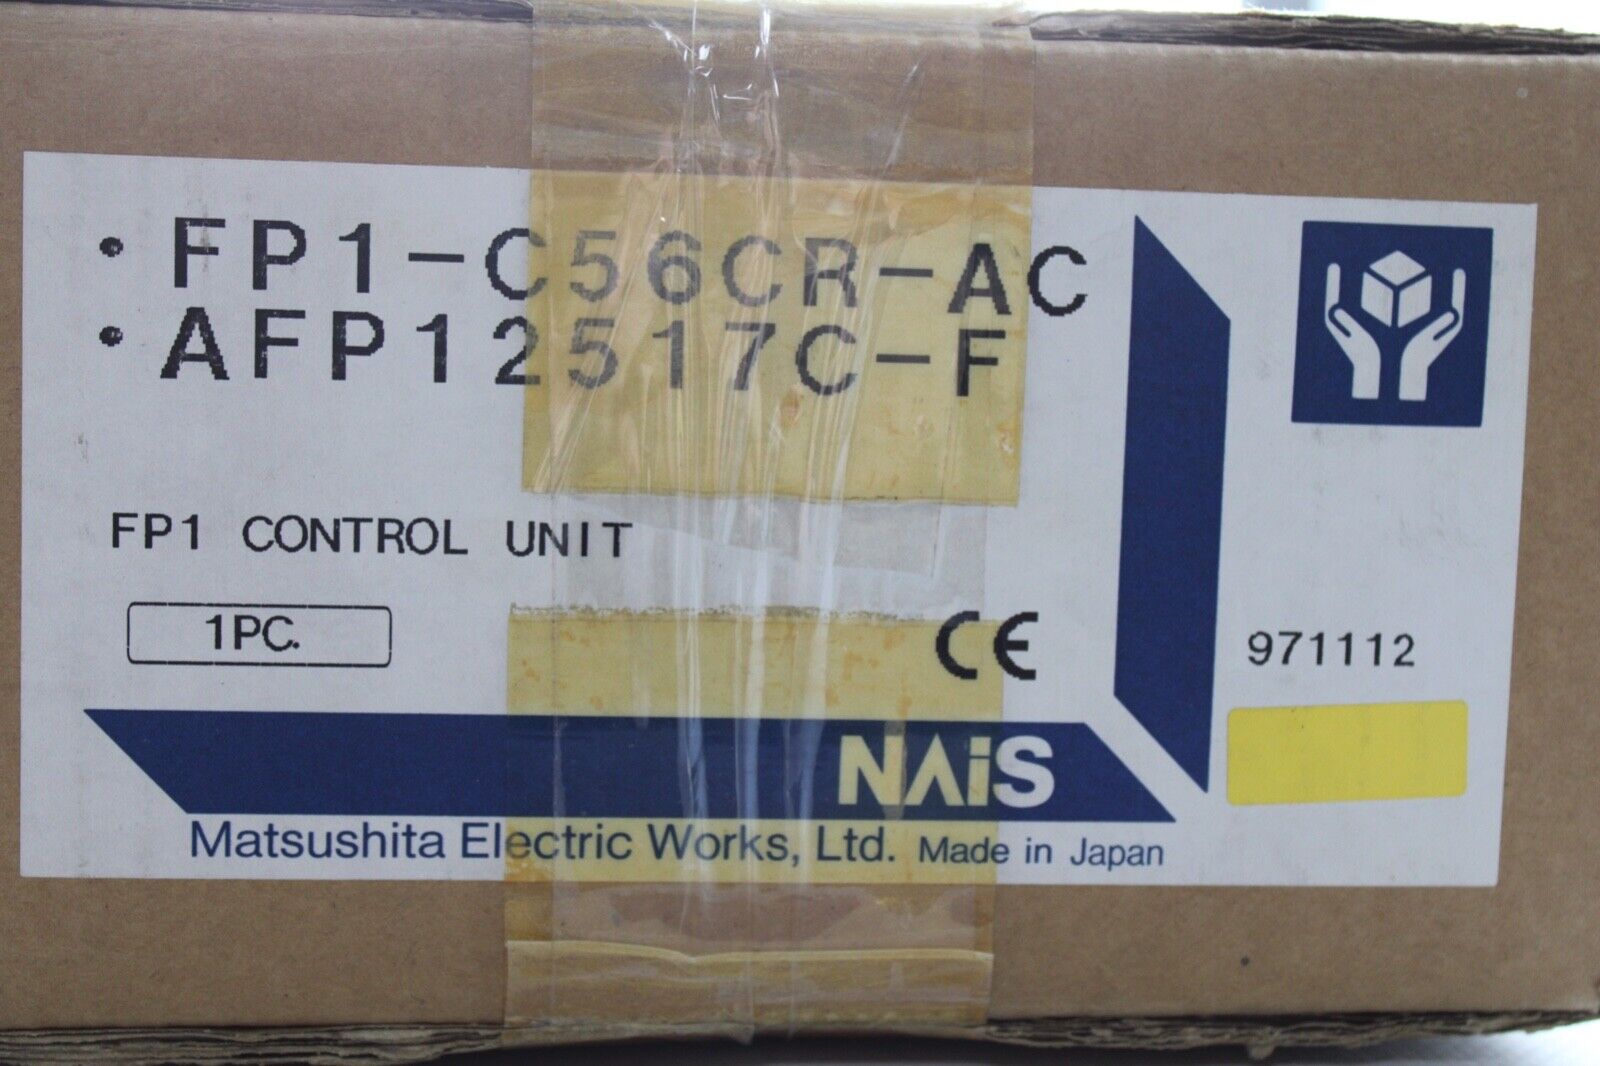 Matsushita NAIS FP1 Control Unit AFP12517C-F FP1-C56CR-F-AC